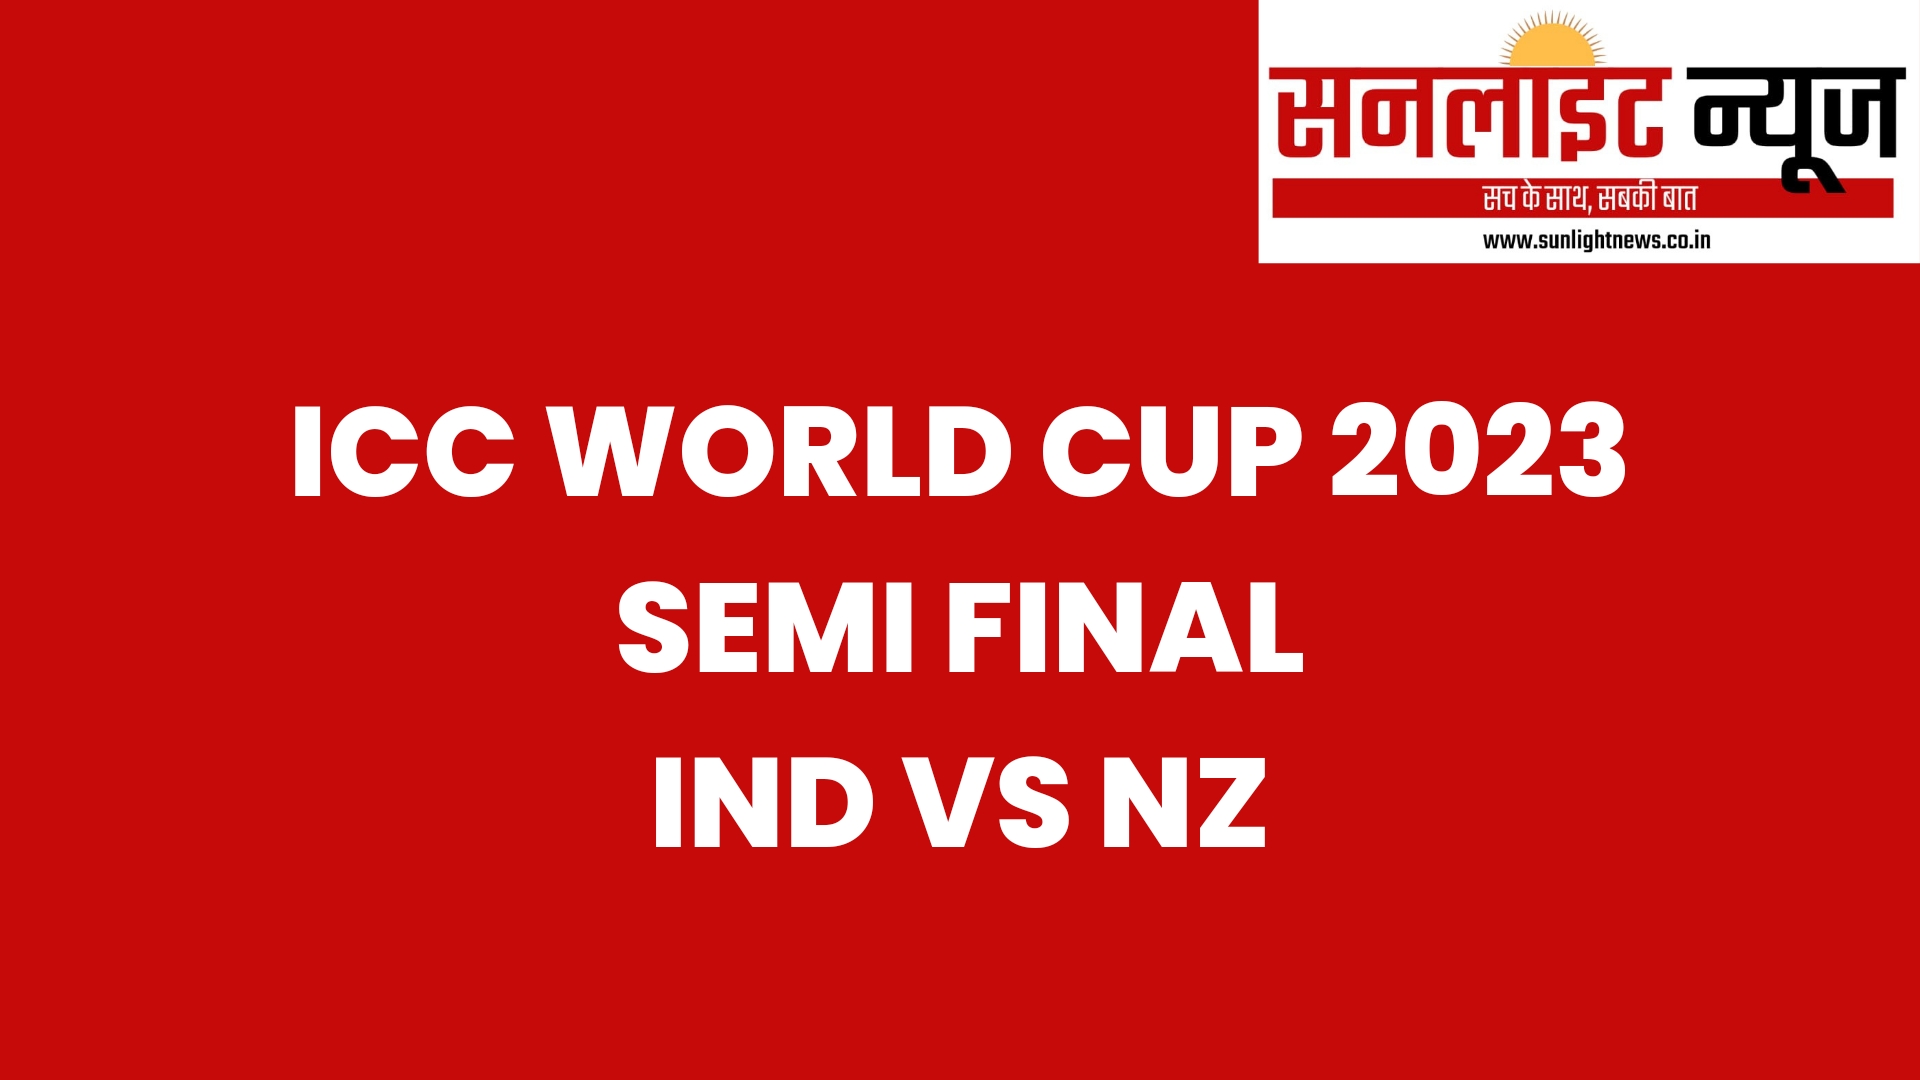 IND vs NZ Semi Final Live